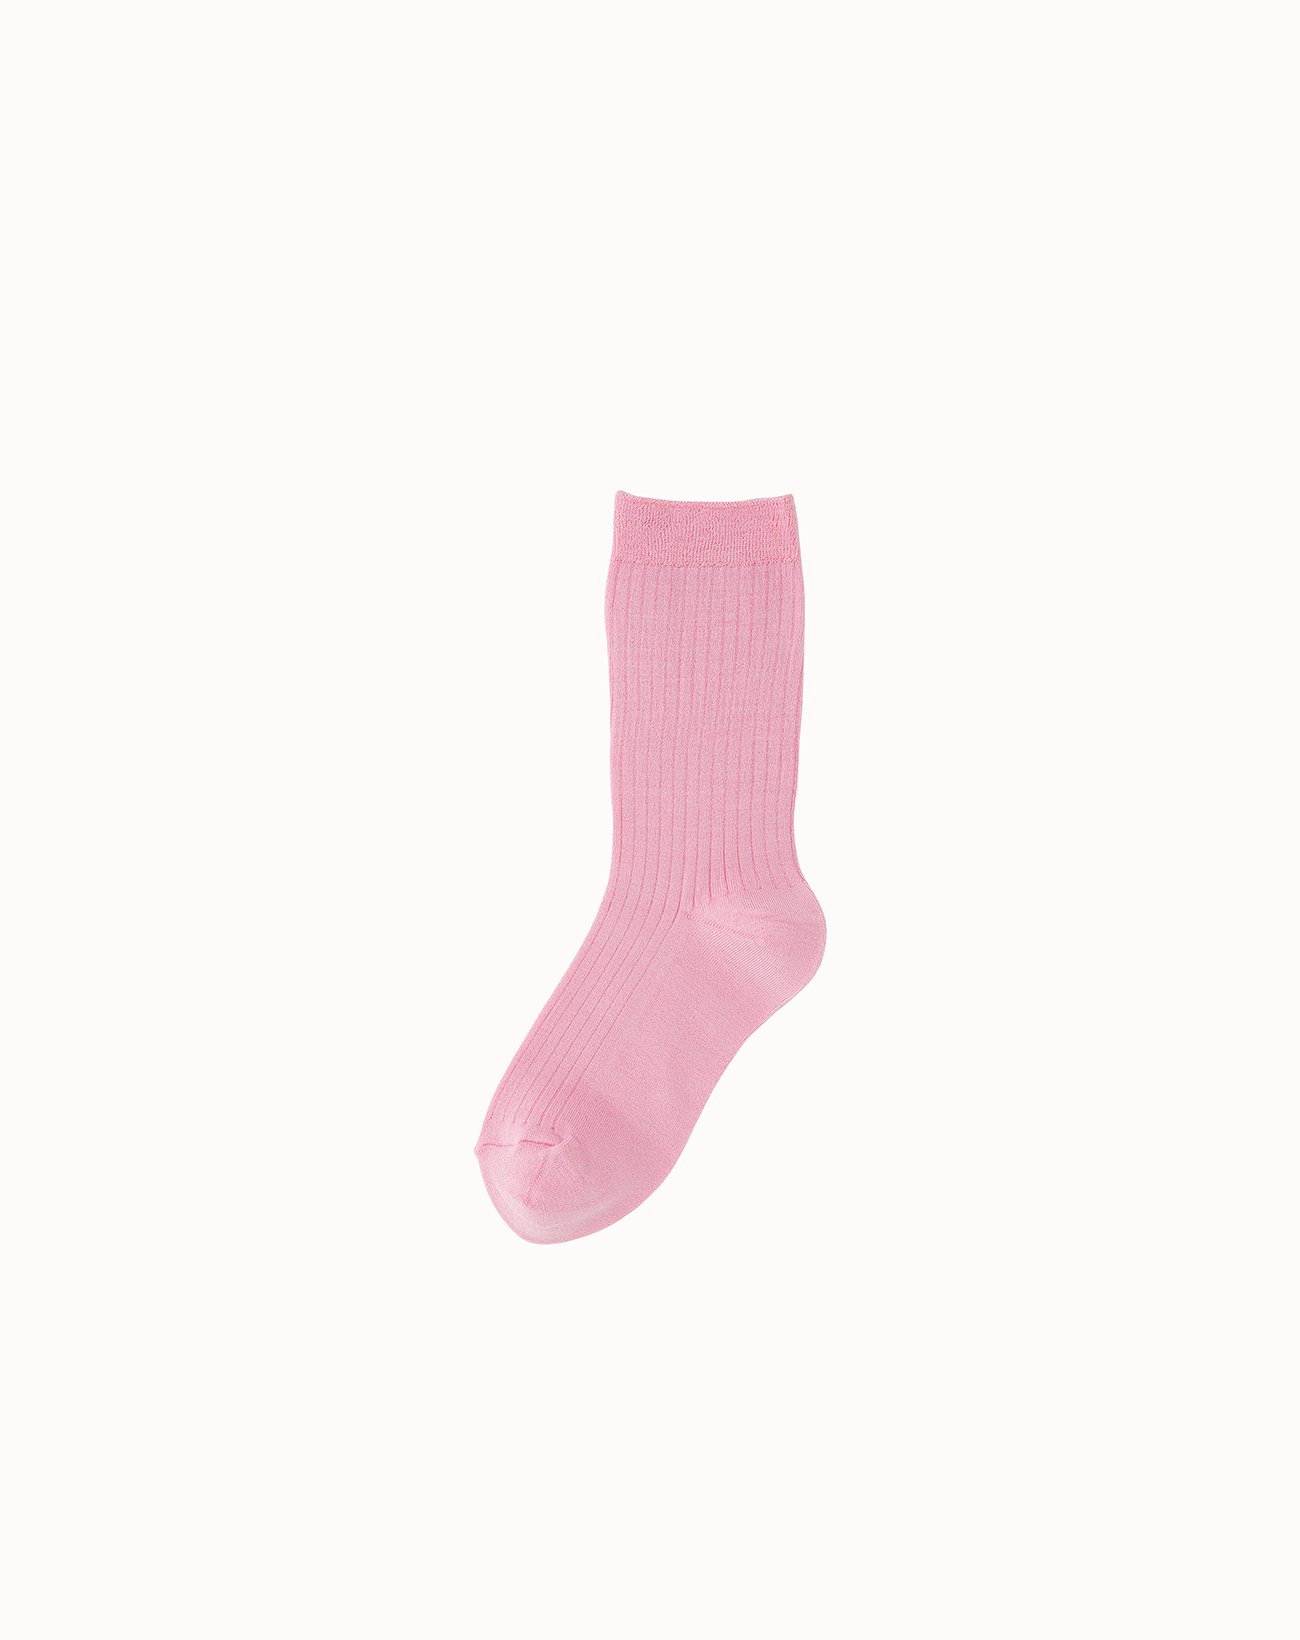 leur logette - Silk Rib Socks - Light Pink